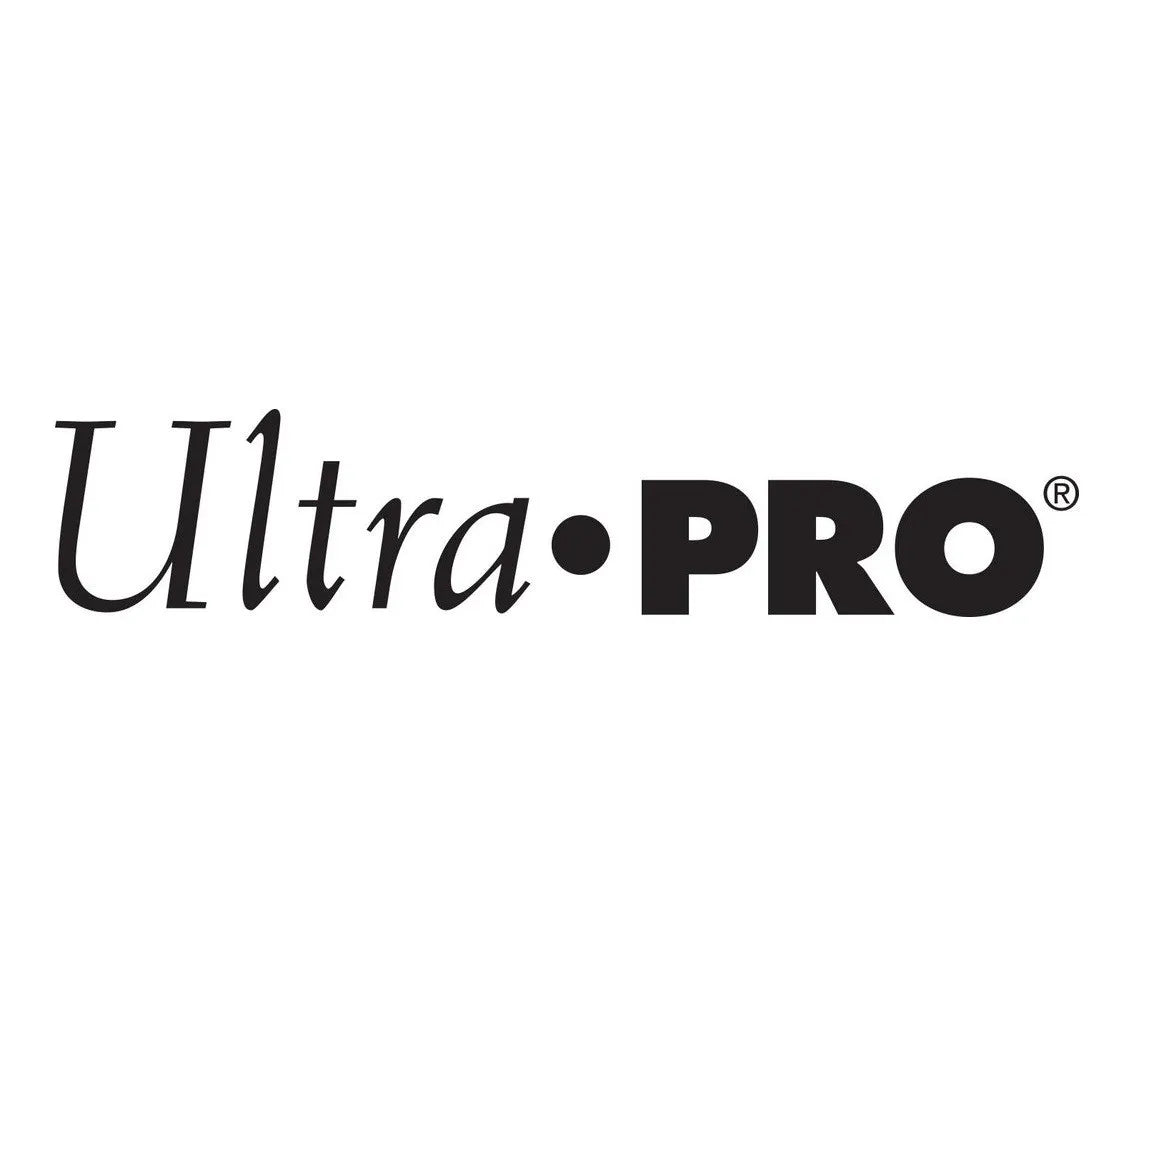 Ultra Pro - Baseball - Boîtier présentoir pour balle de baseball (forme carré)